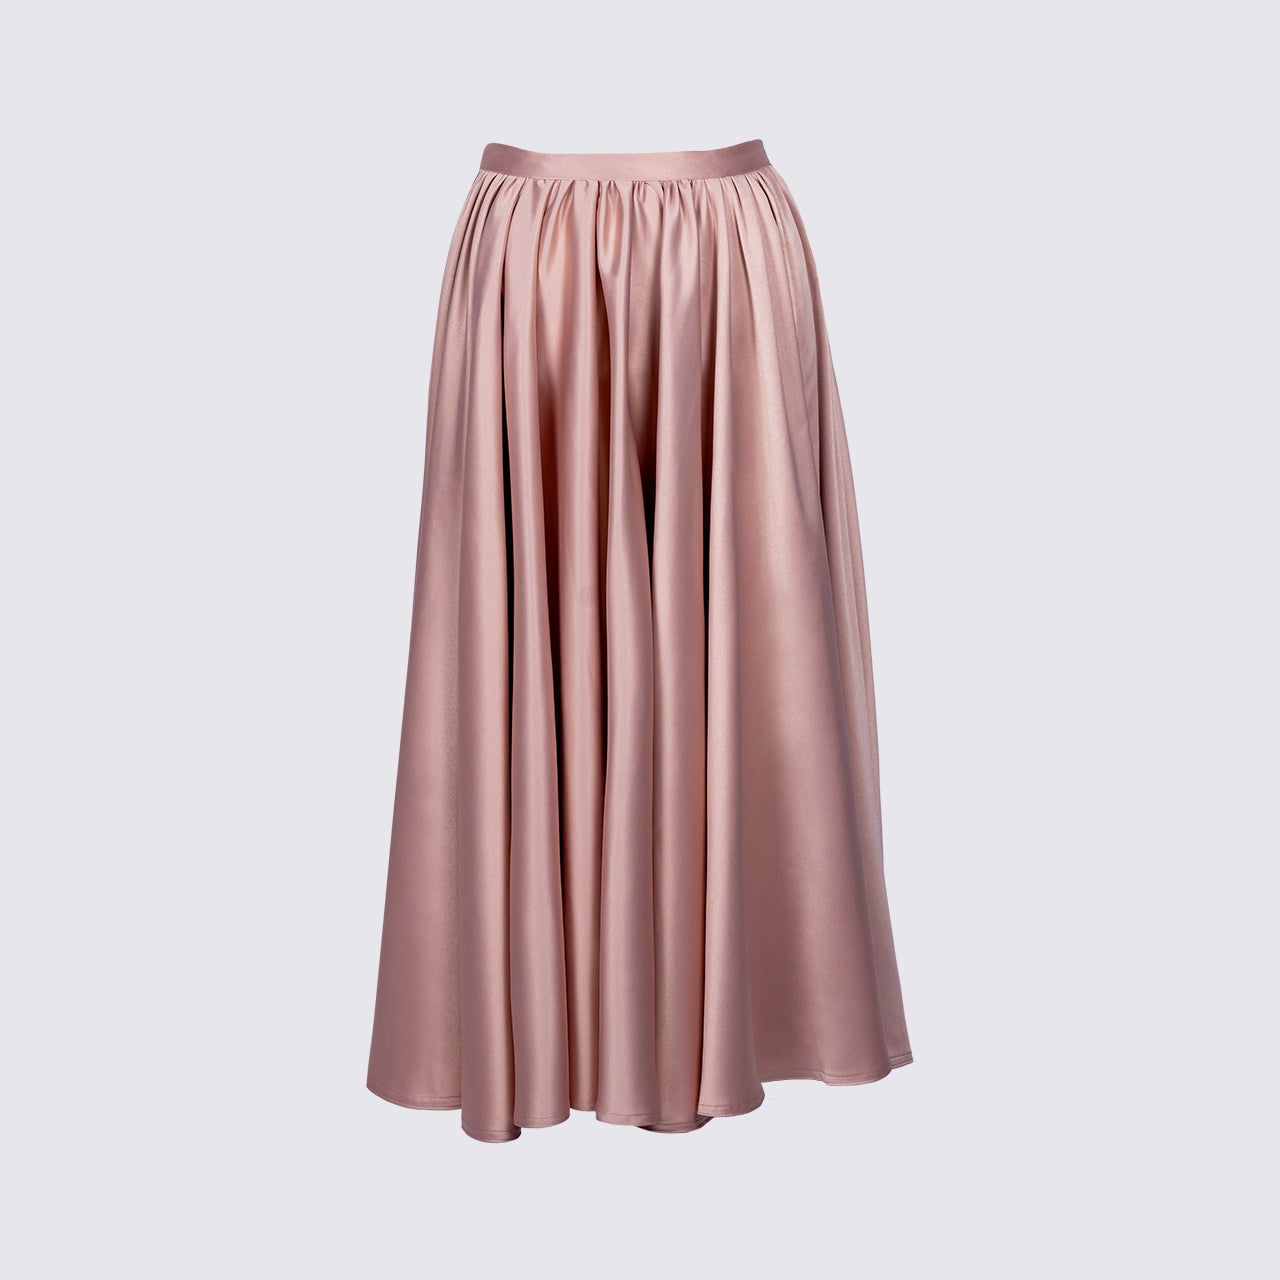 Pinkish - Full Circle Skirt